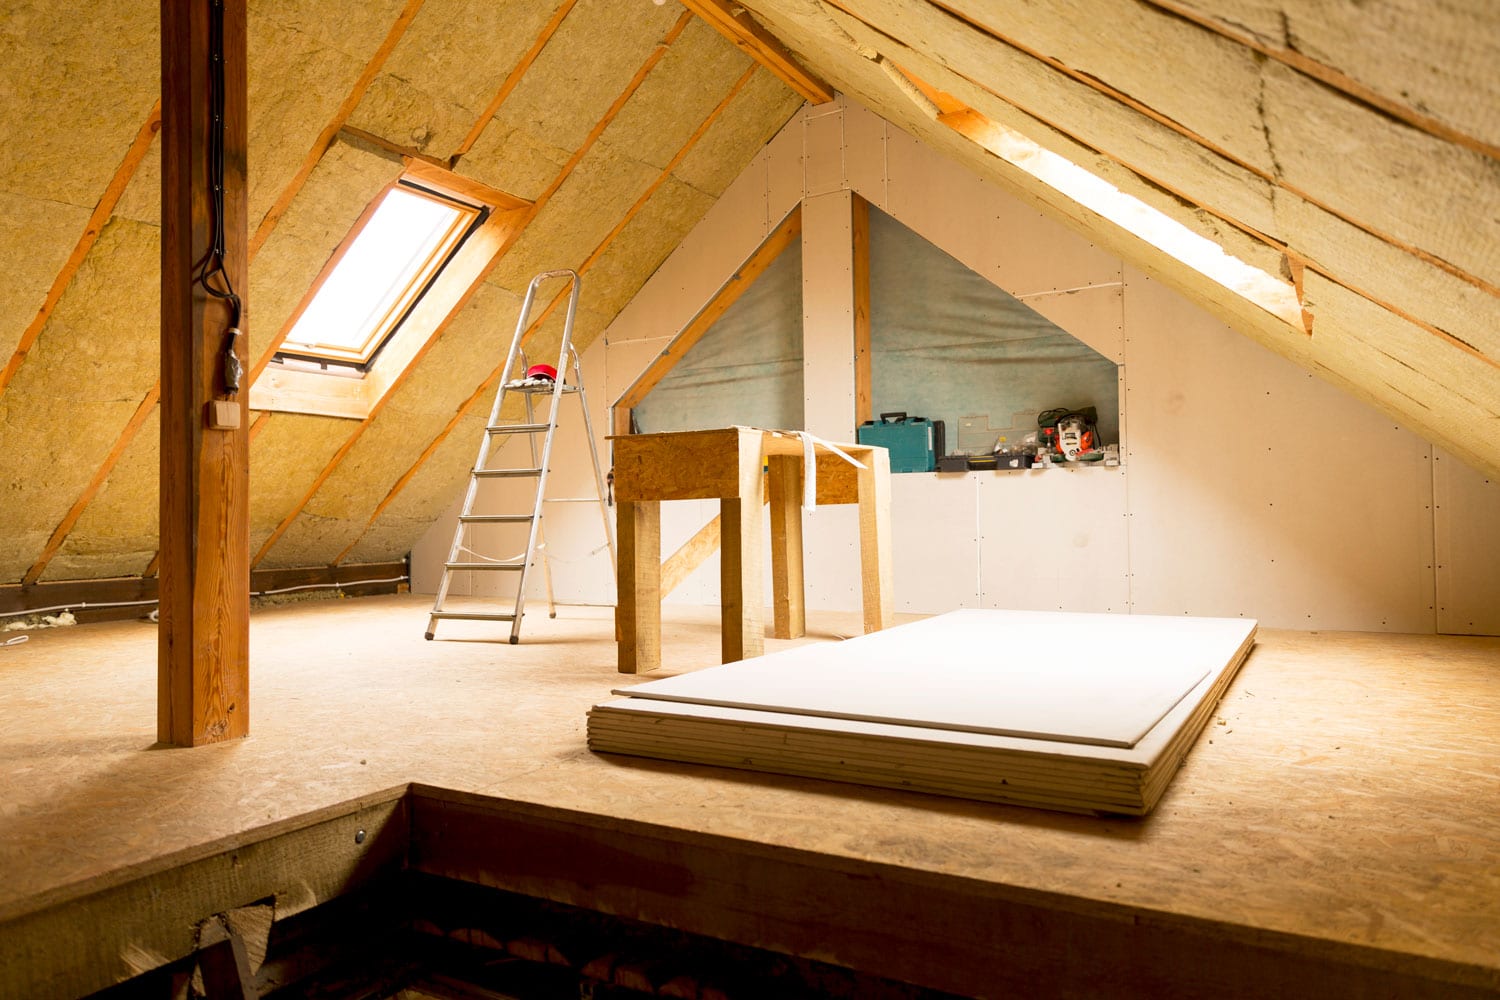 Interior of an attic with fiberglass insulation